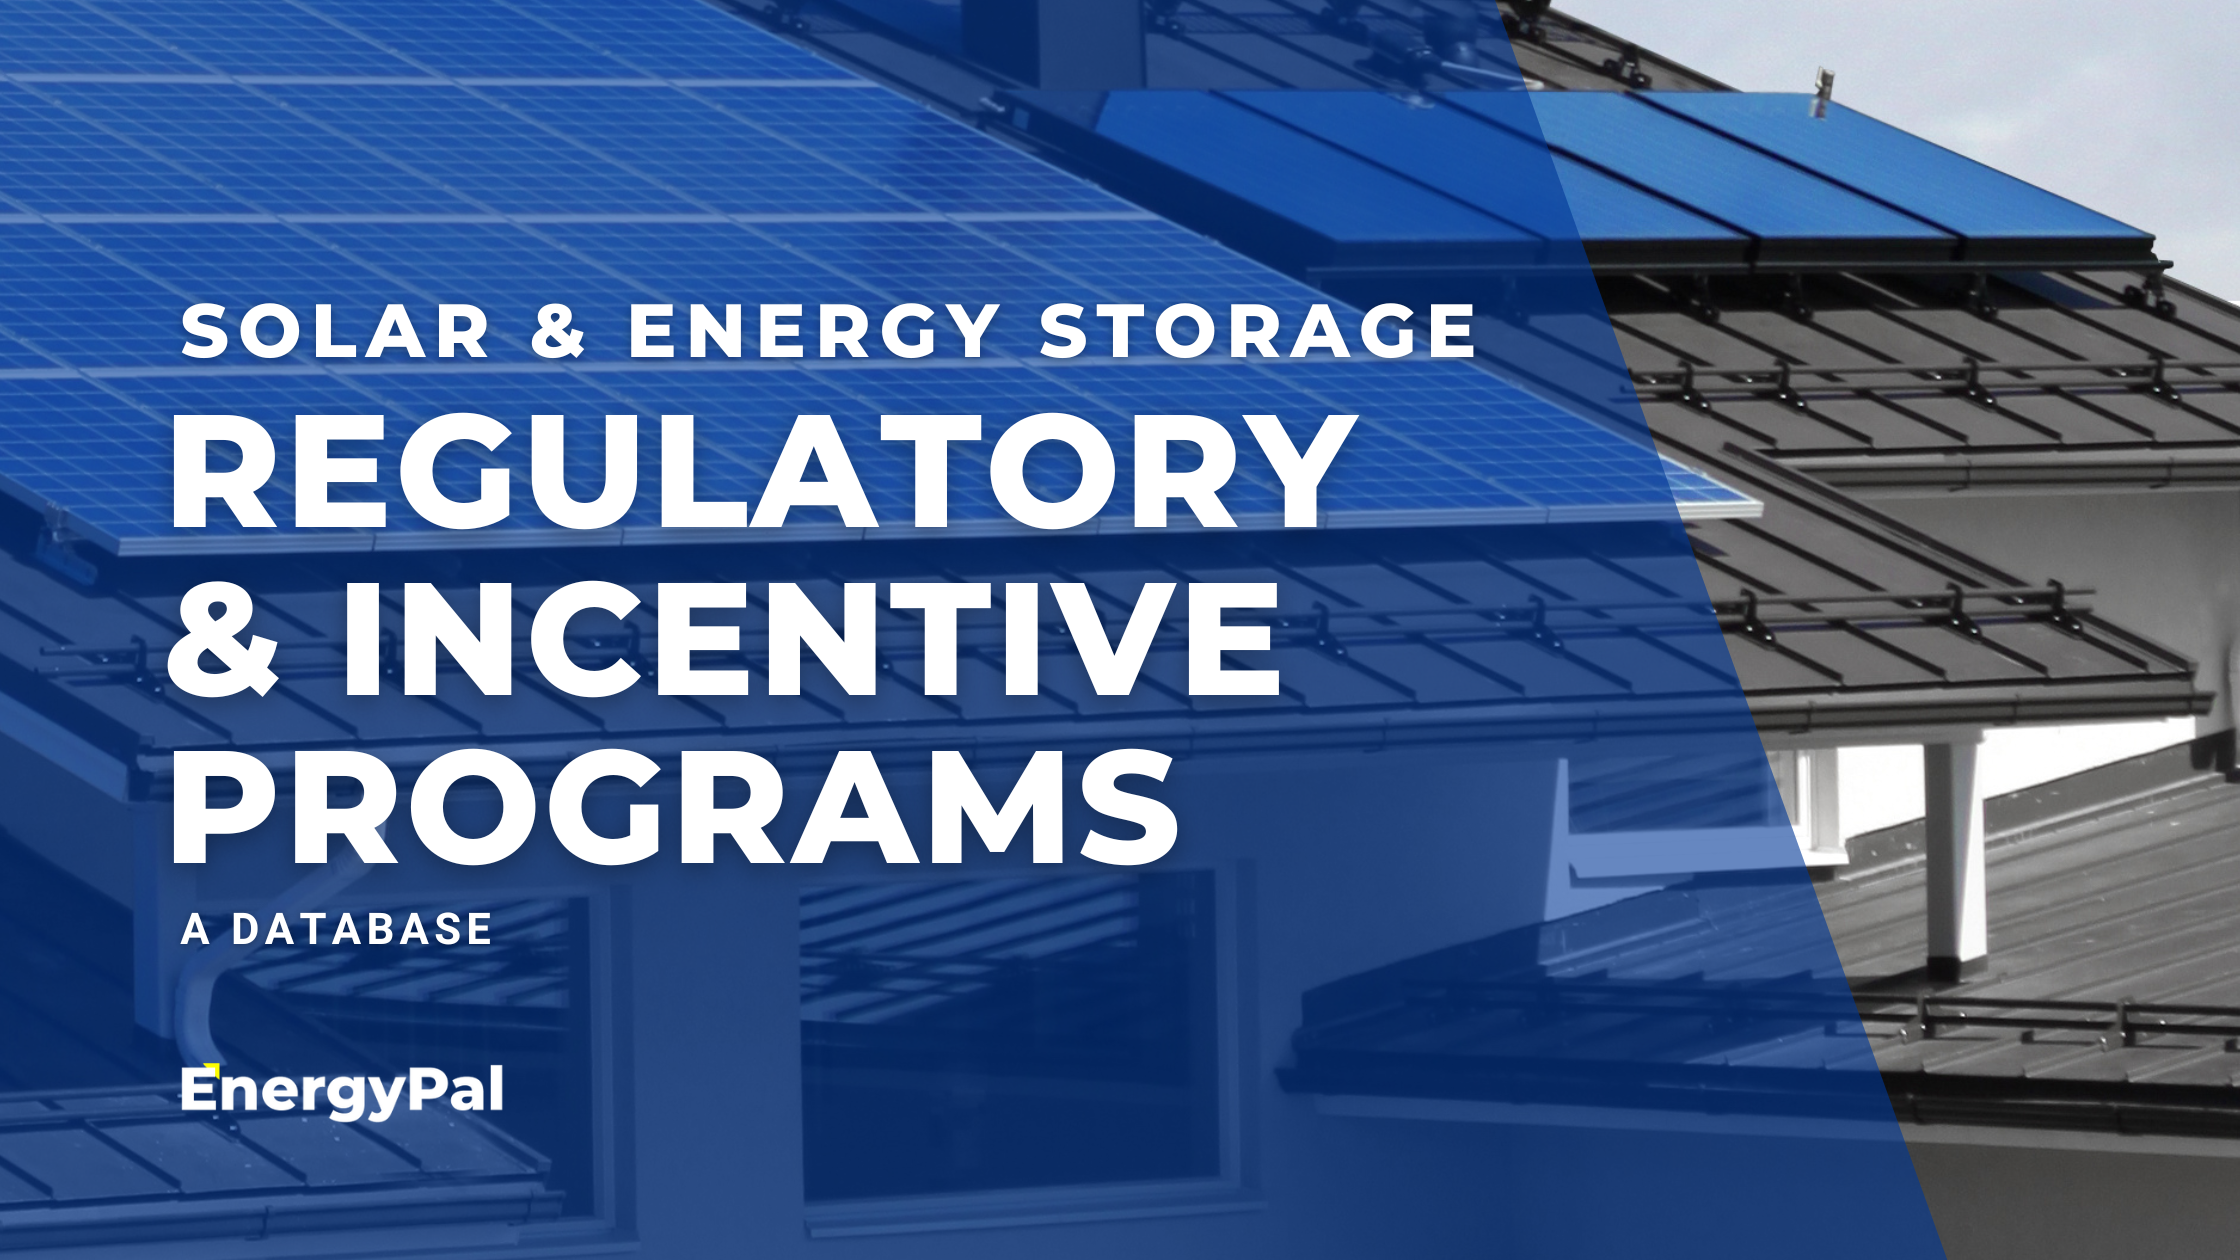 Solar & Energy Storage Regulatory and Incentive Program Database